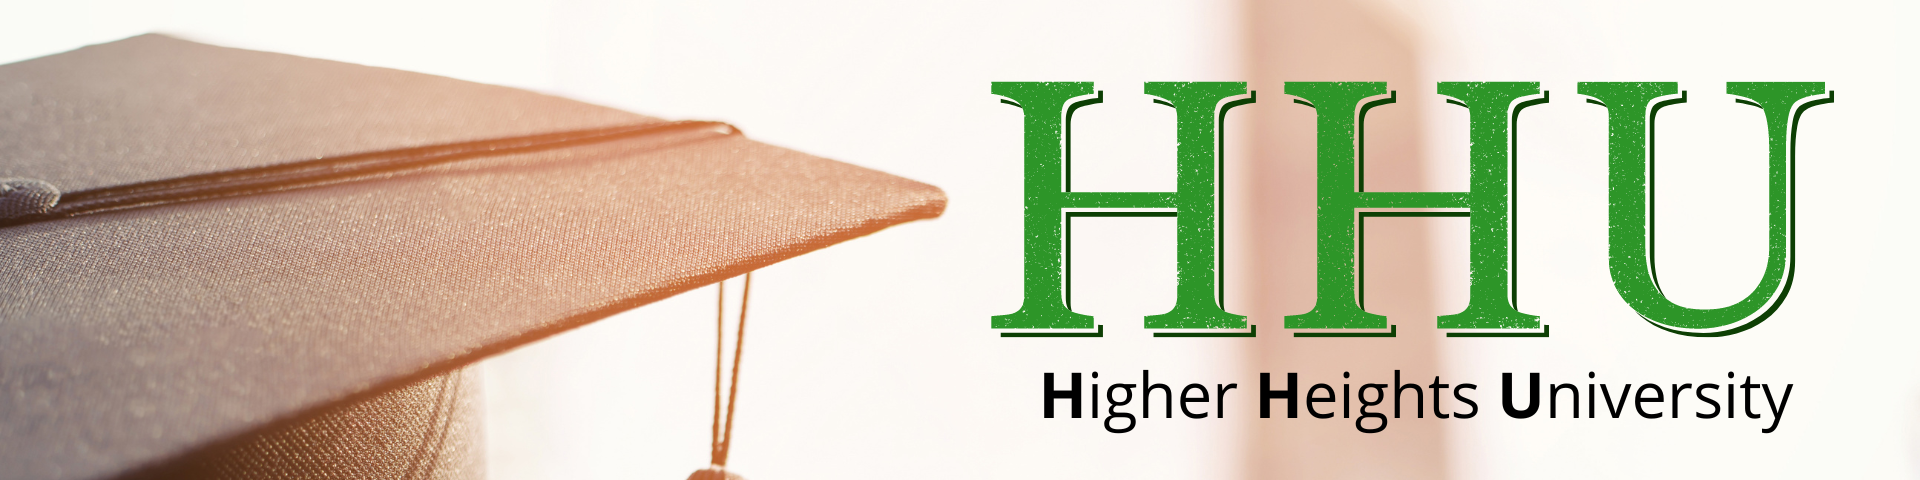 HHU - Higher Heights University